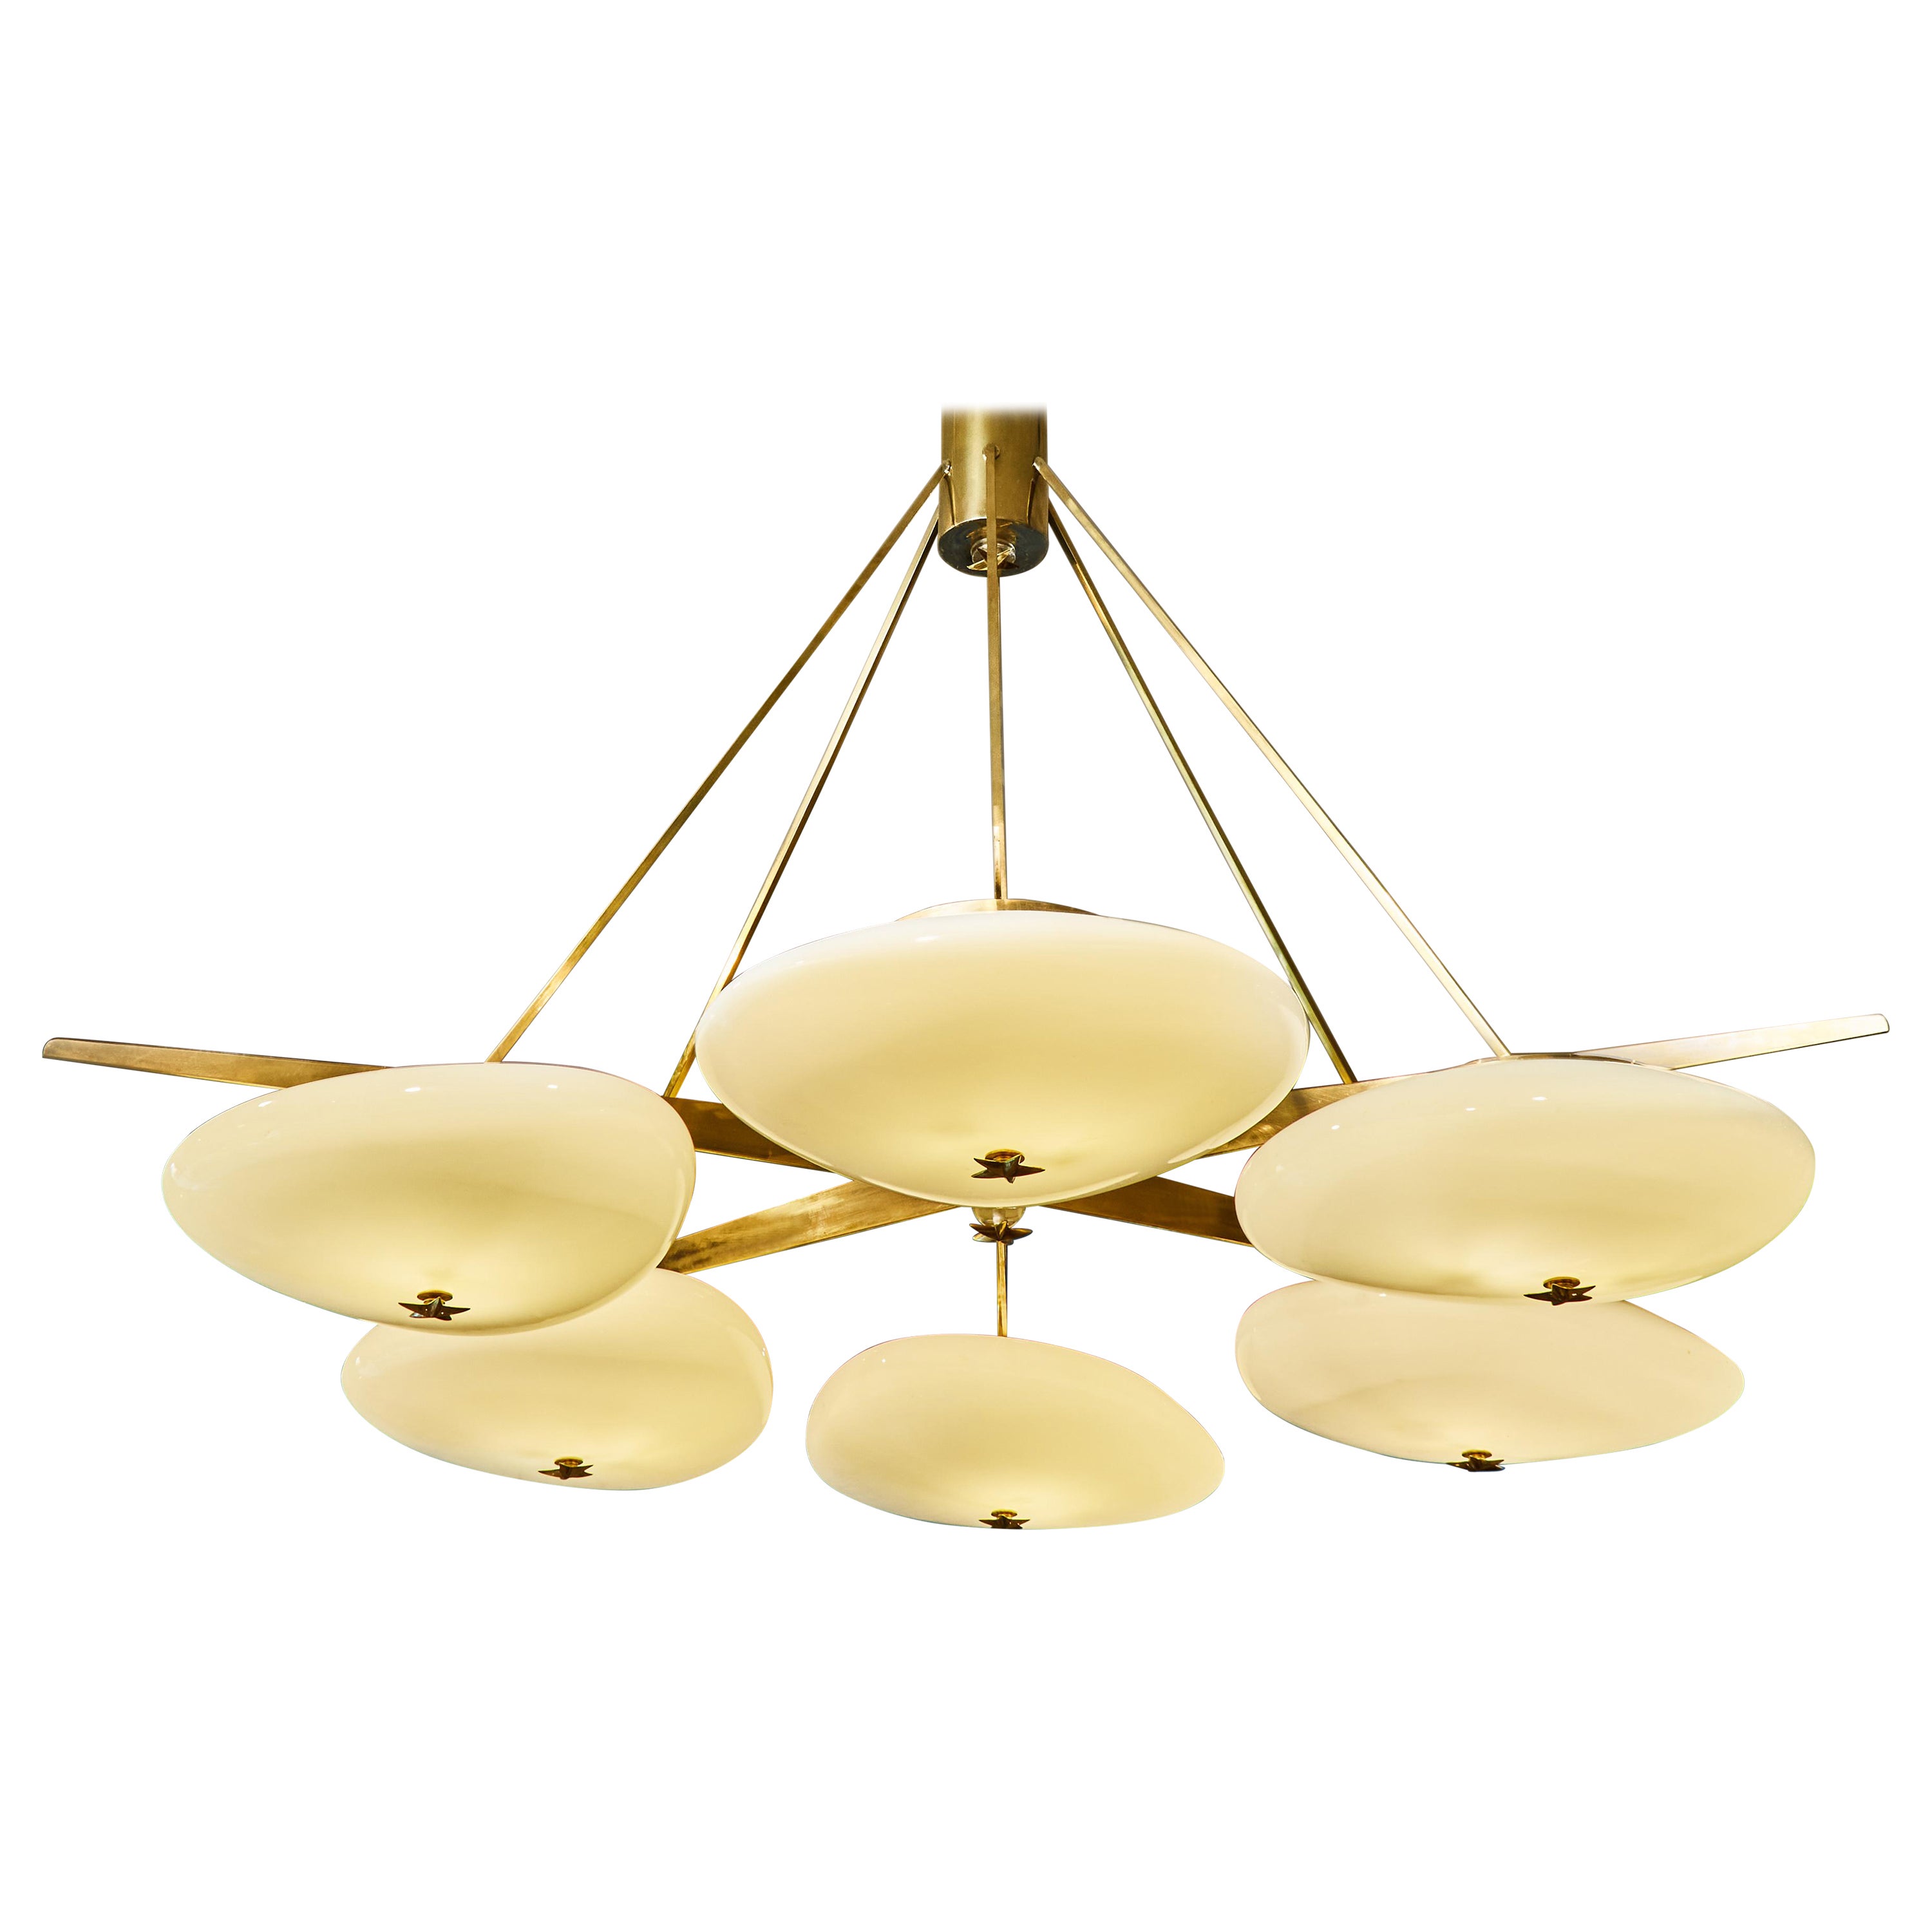 Brass chandelier by Studio Glustin. For Sale